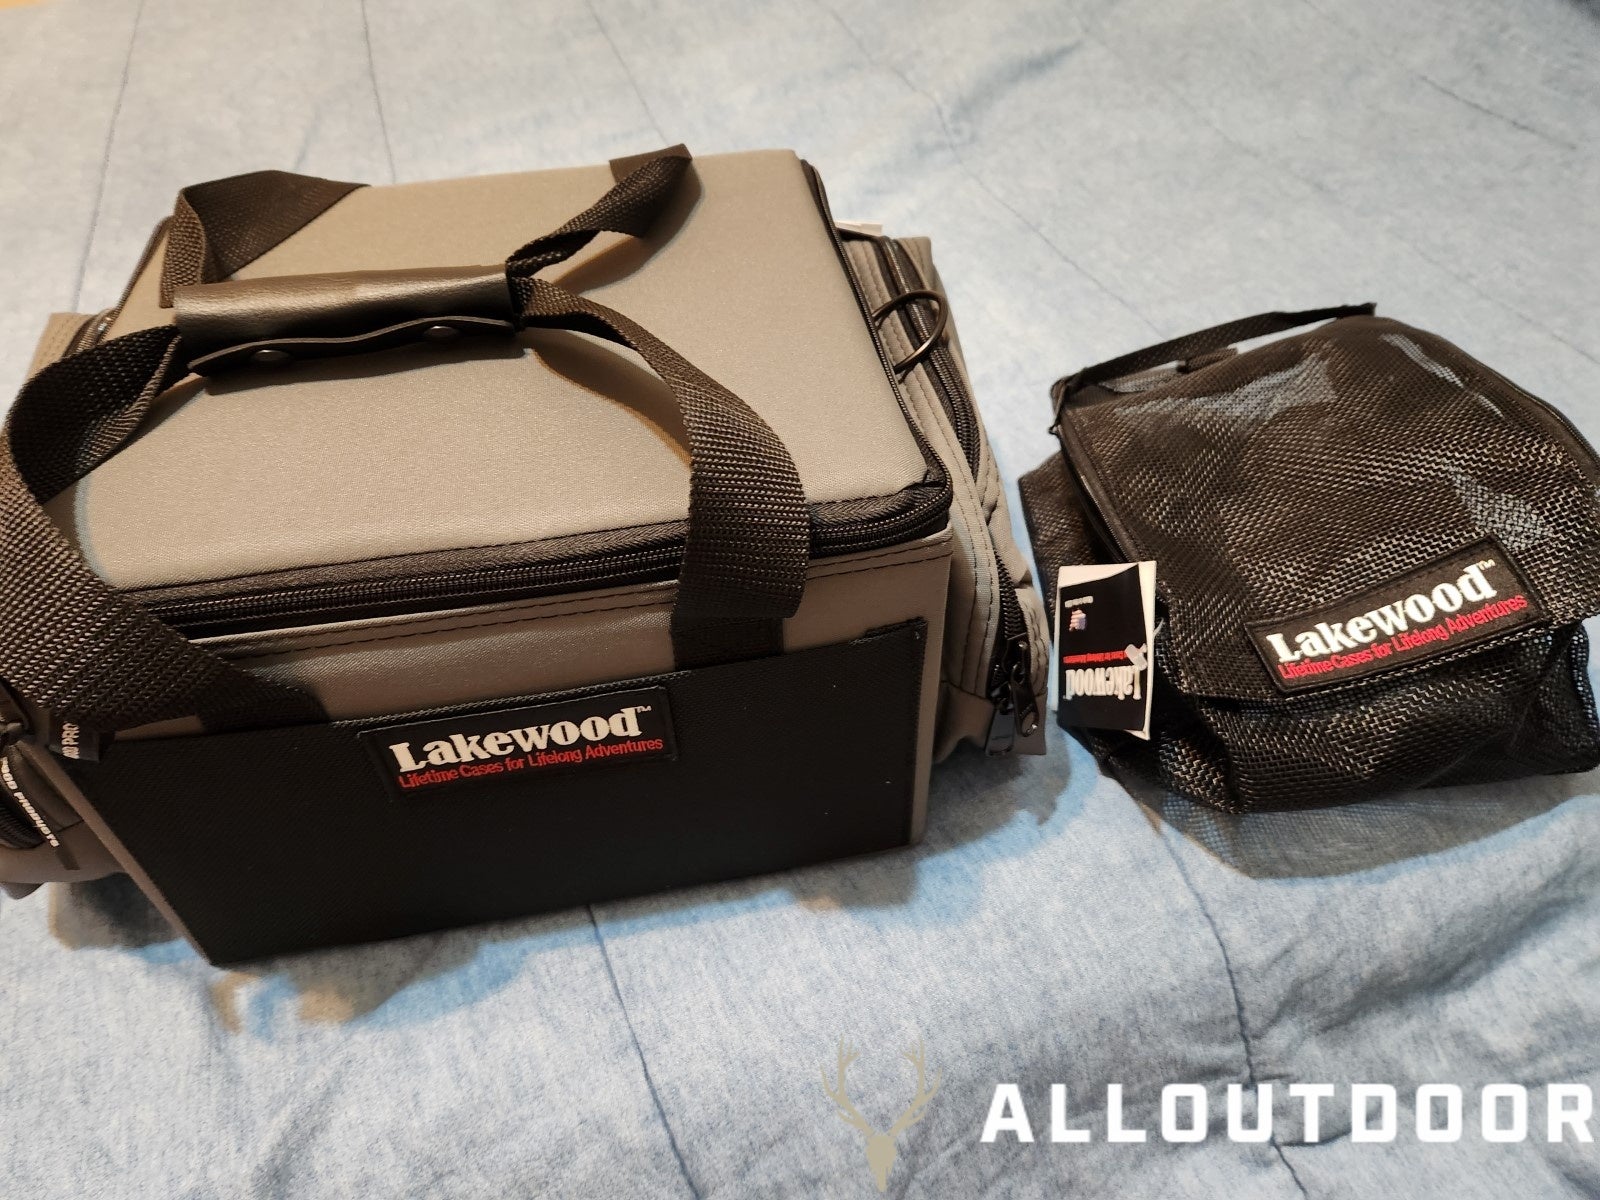 AllOutdoor Review – Lakewood Mini Sidekick Tackle Box